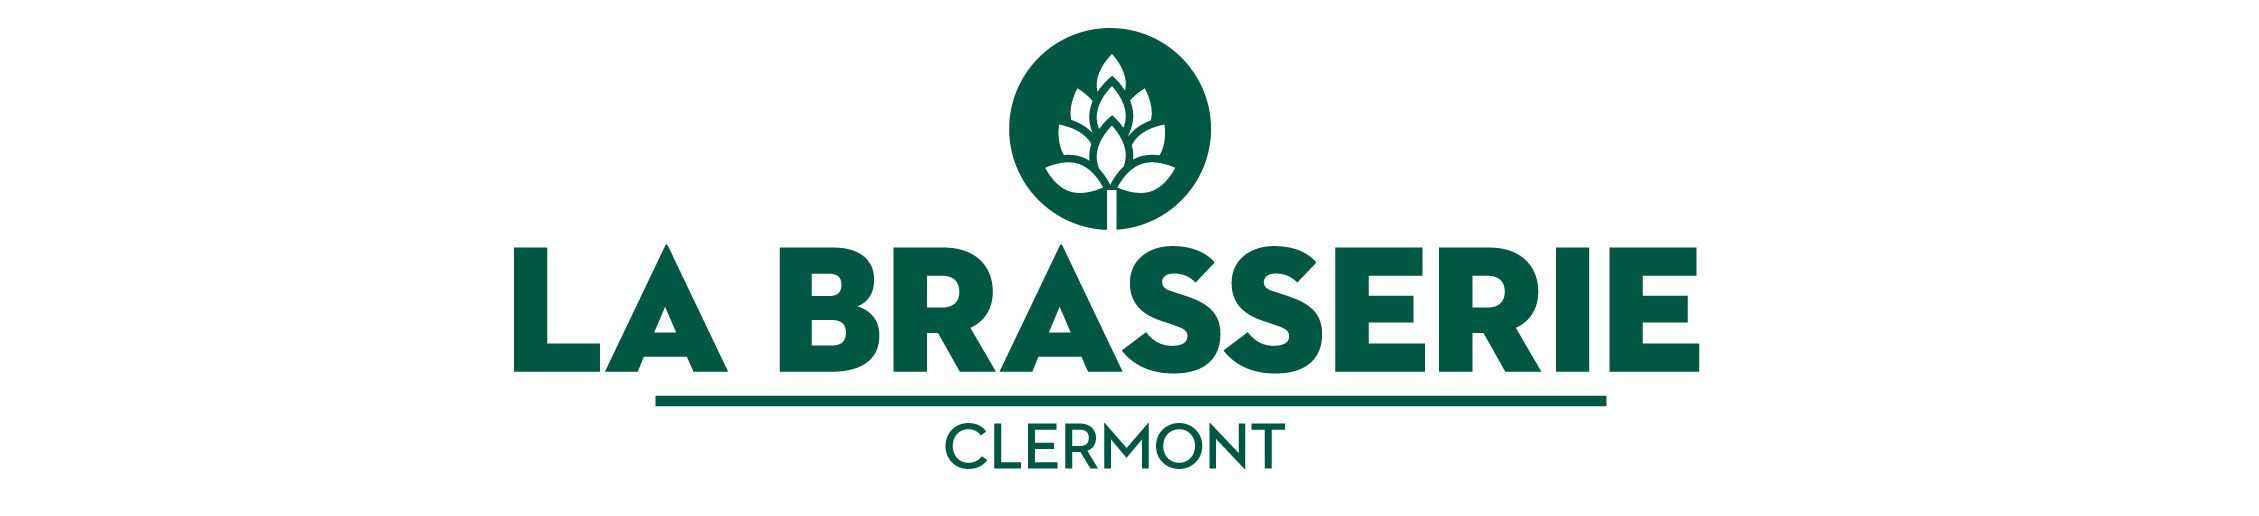 La Brasserie Clermont Logo